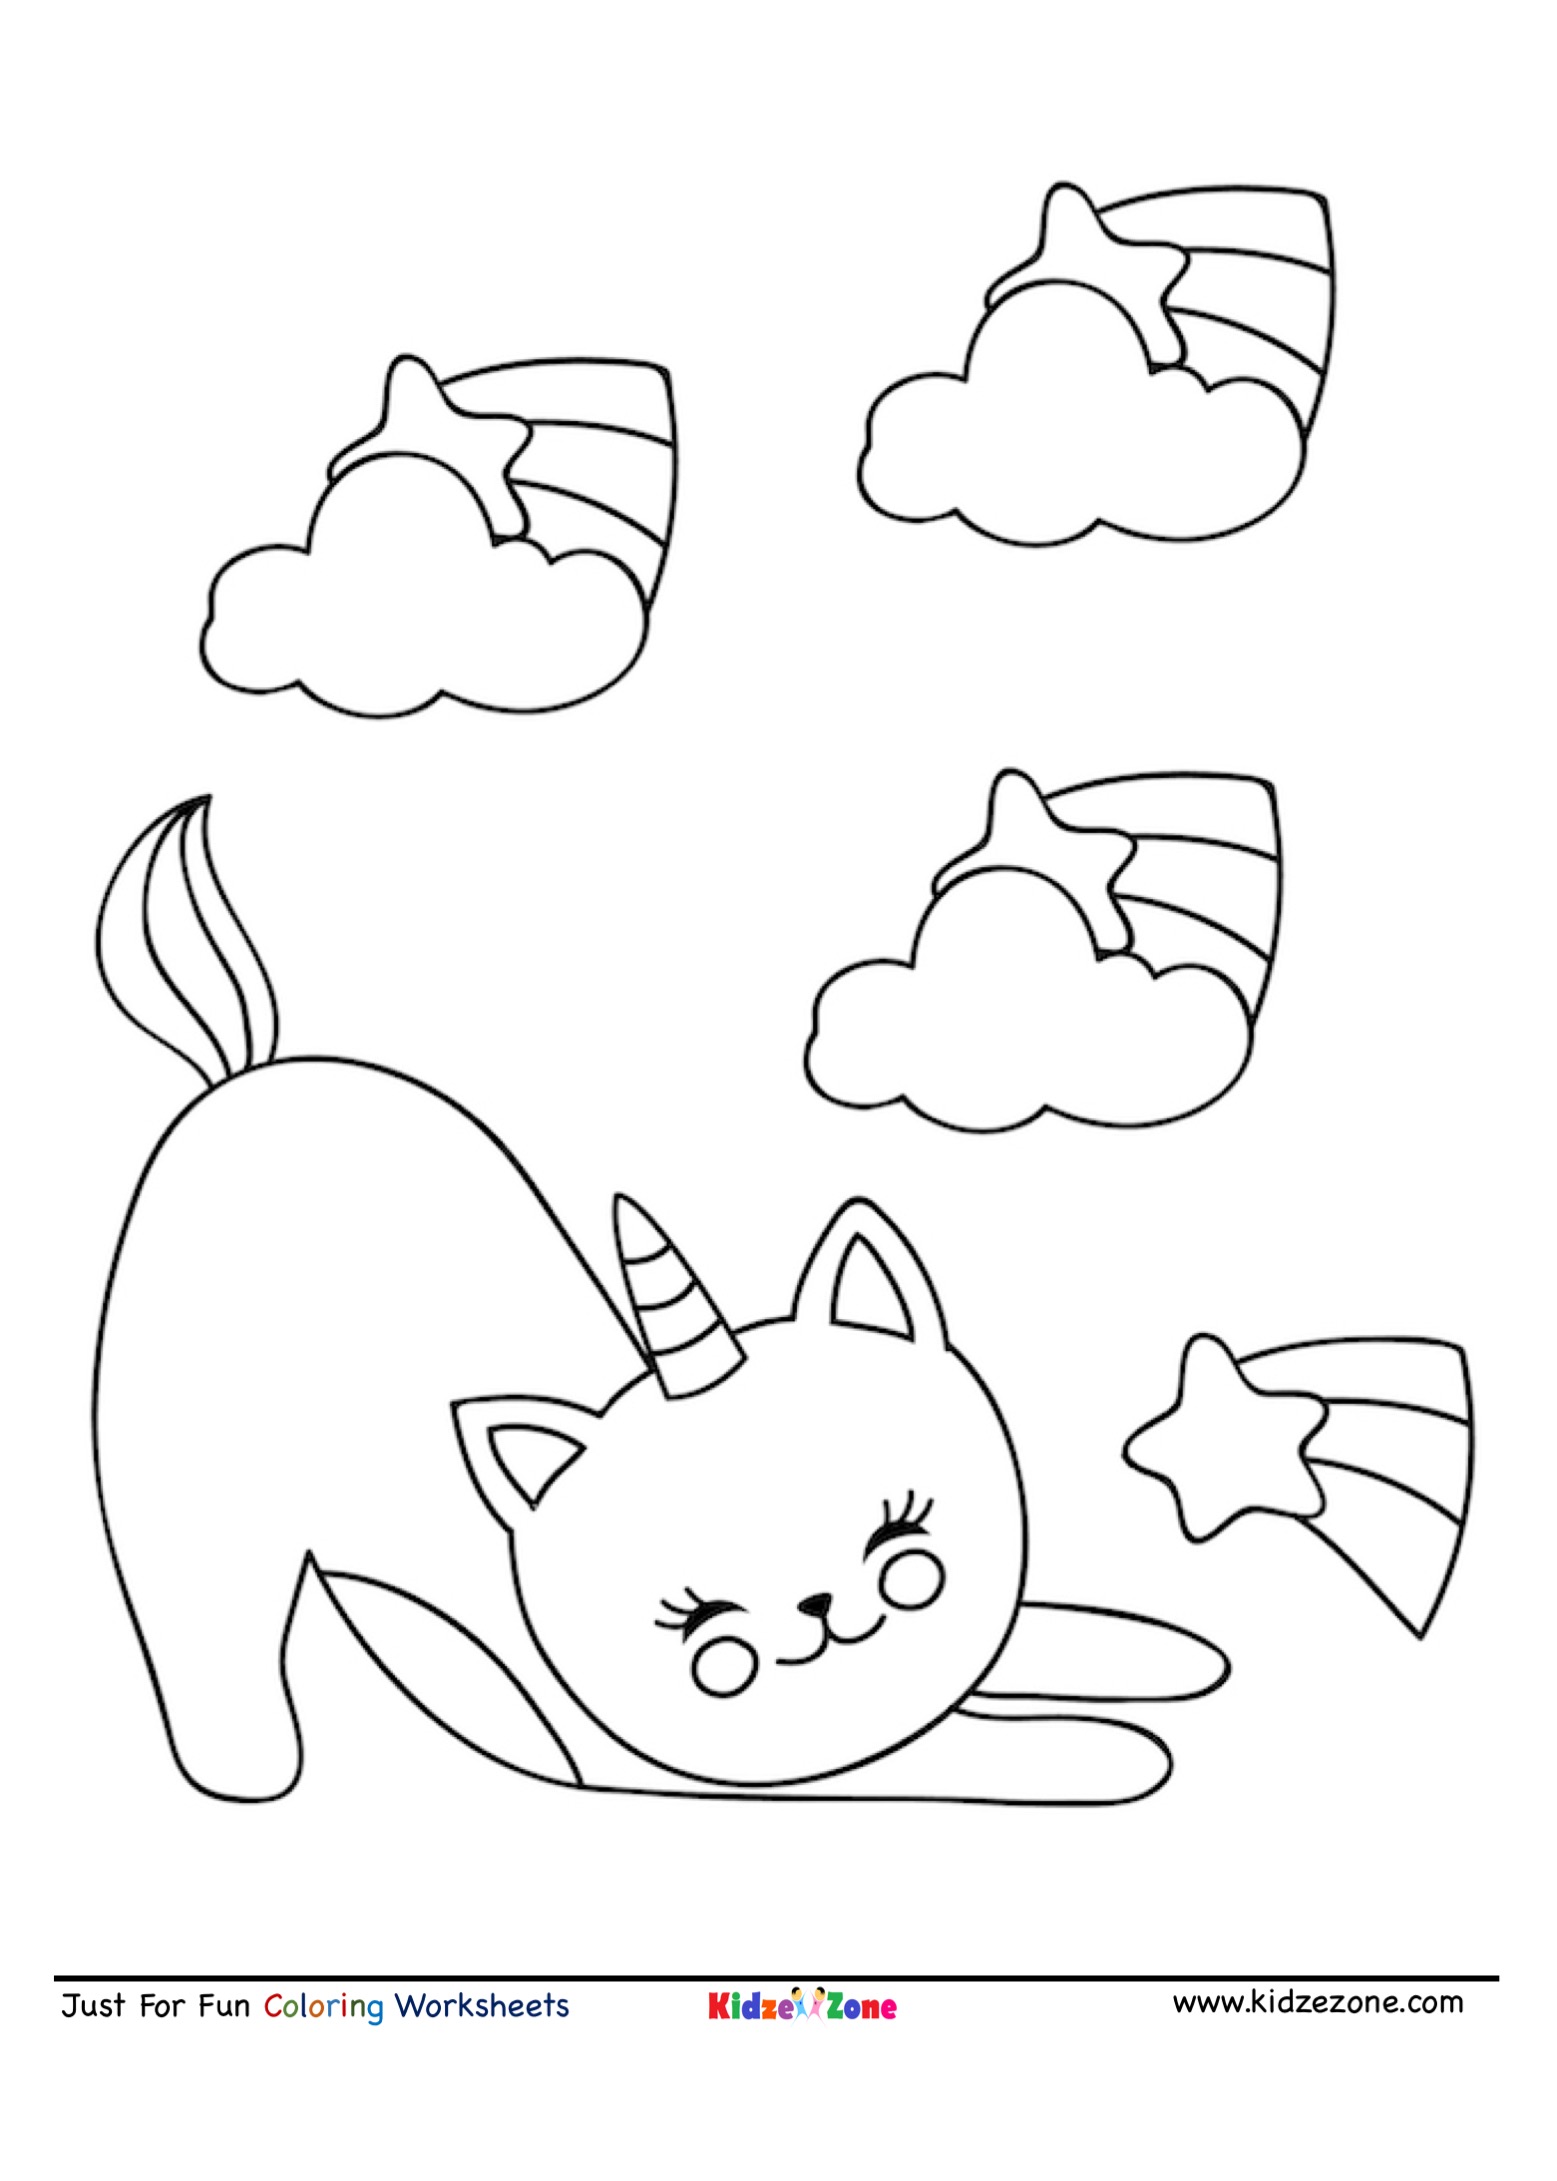 Download Playful cat cartoon Coloring Page - KidzeZone